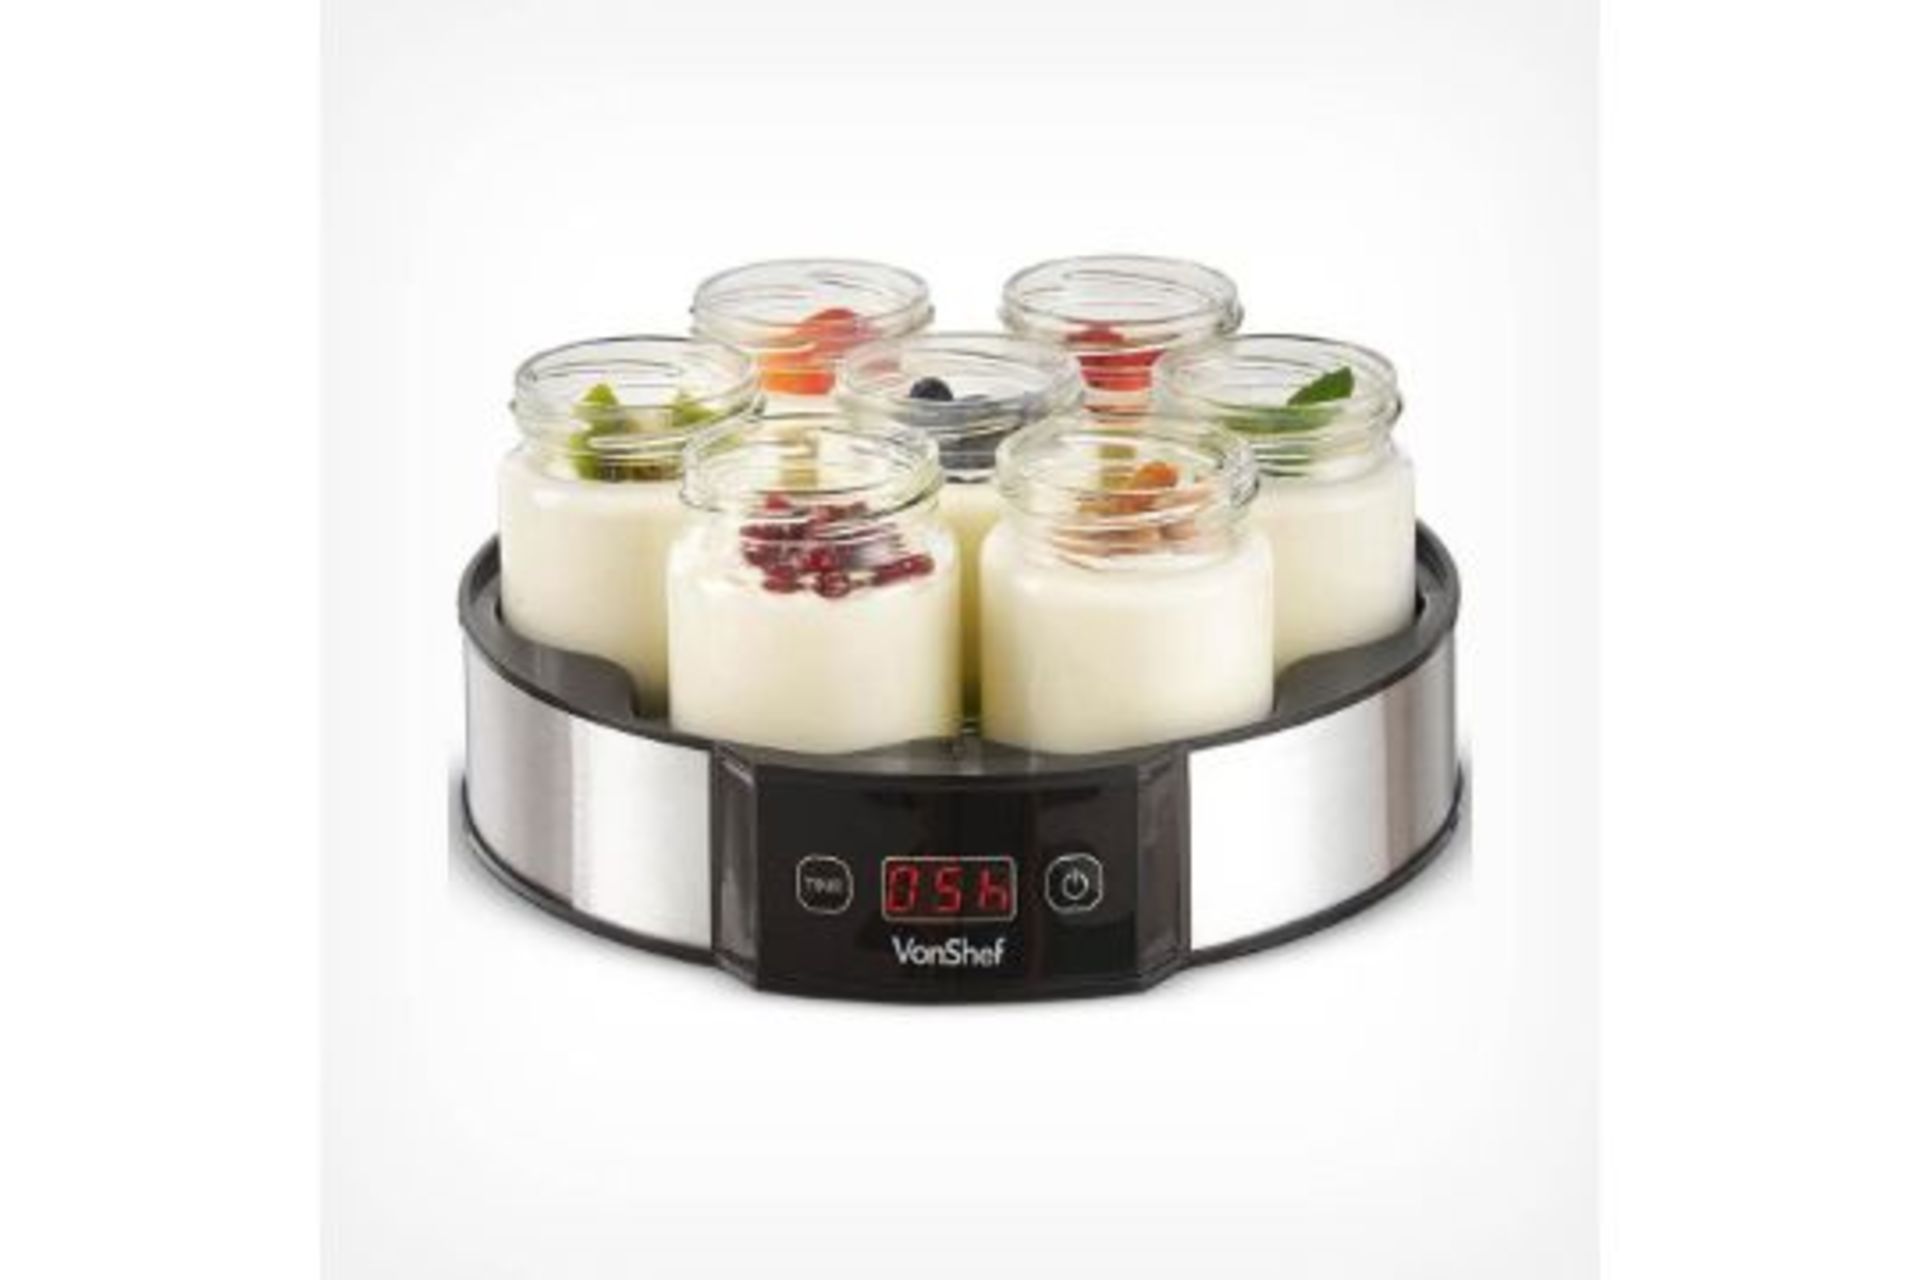 Digital Yoghurt Maker 7 Jars - PW. Digital Yoghurt Maker & 7 JarsIf you love yoghurt but want a